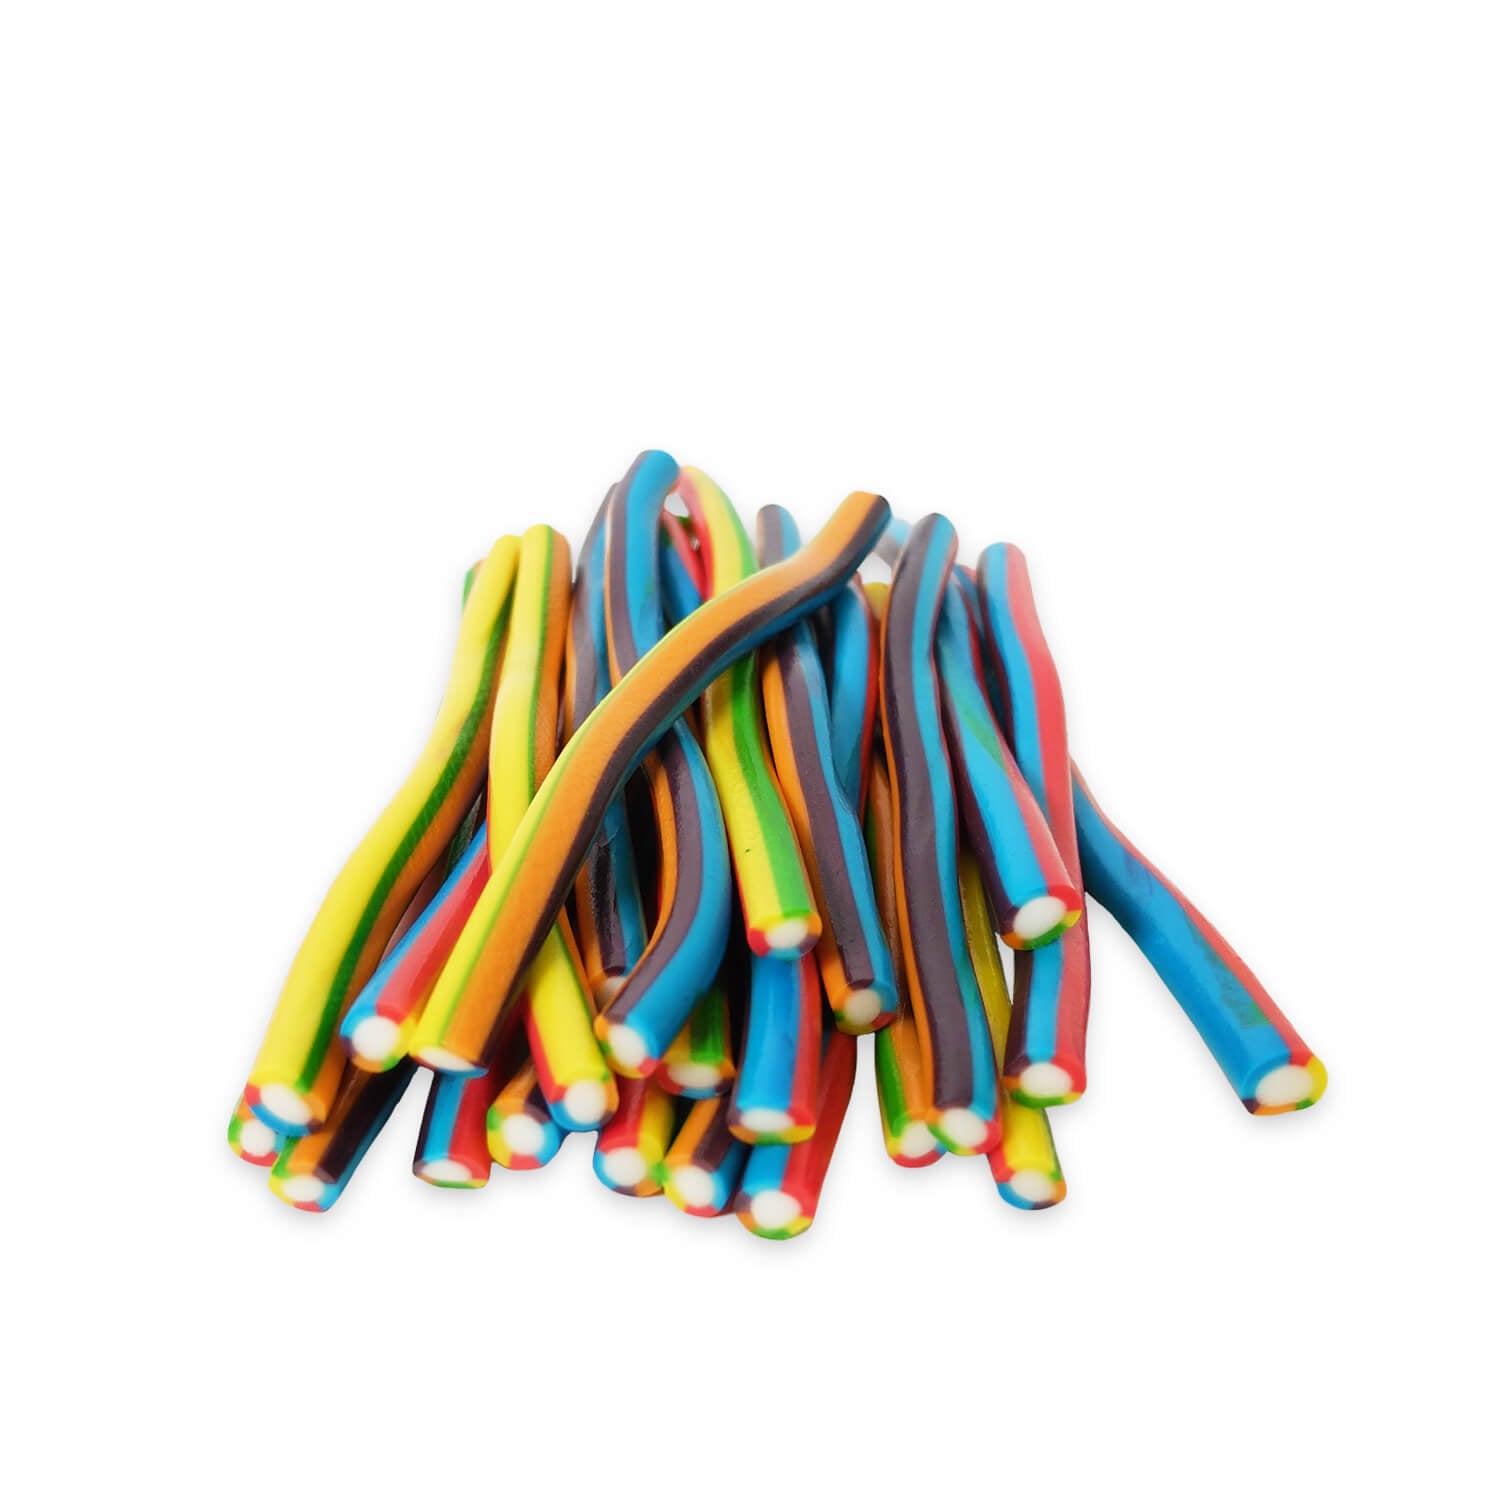 Jelly rainbow pencils